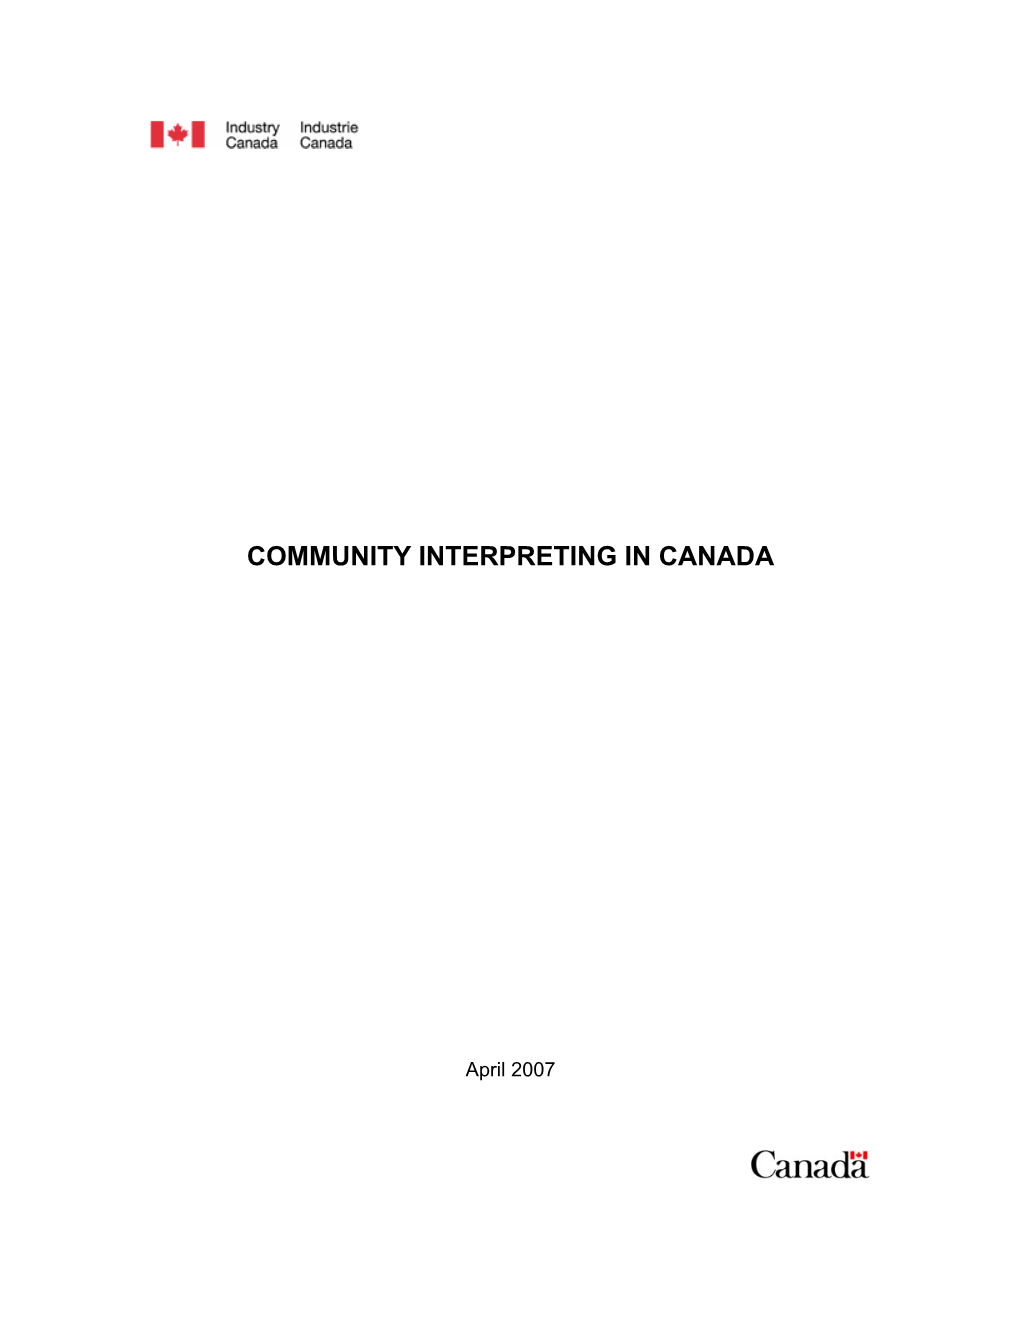 Community Interpreting in Canada